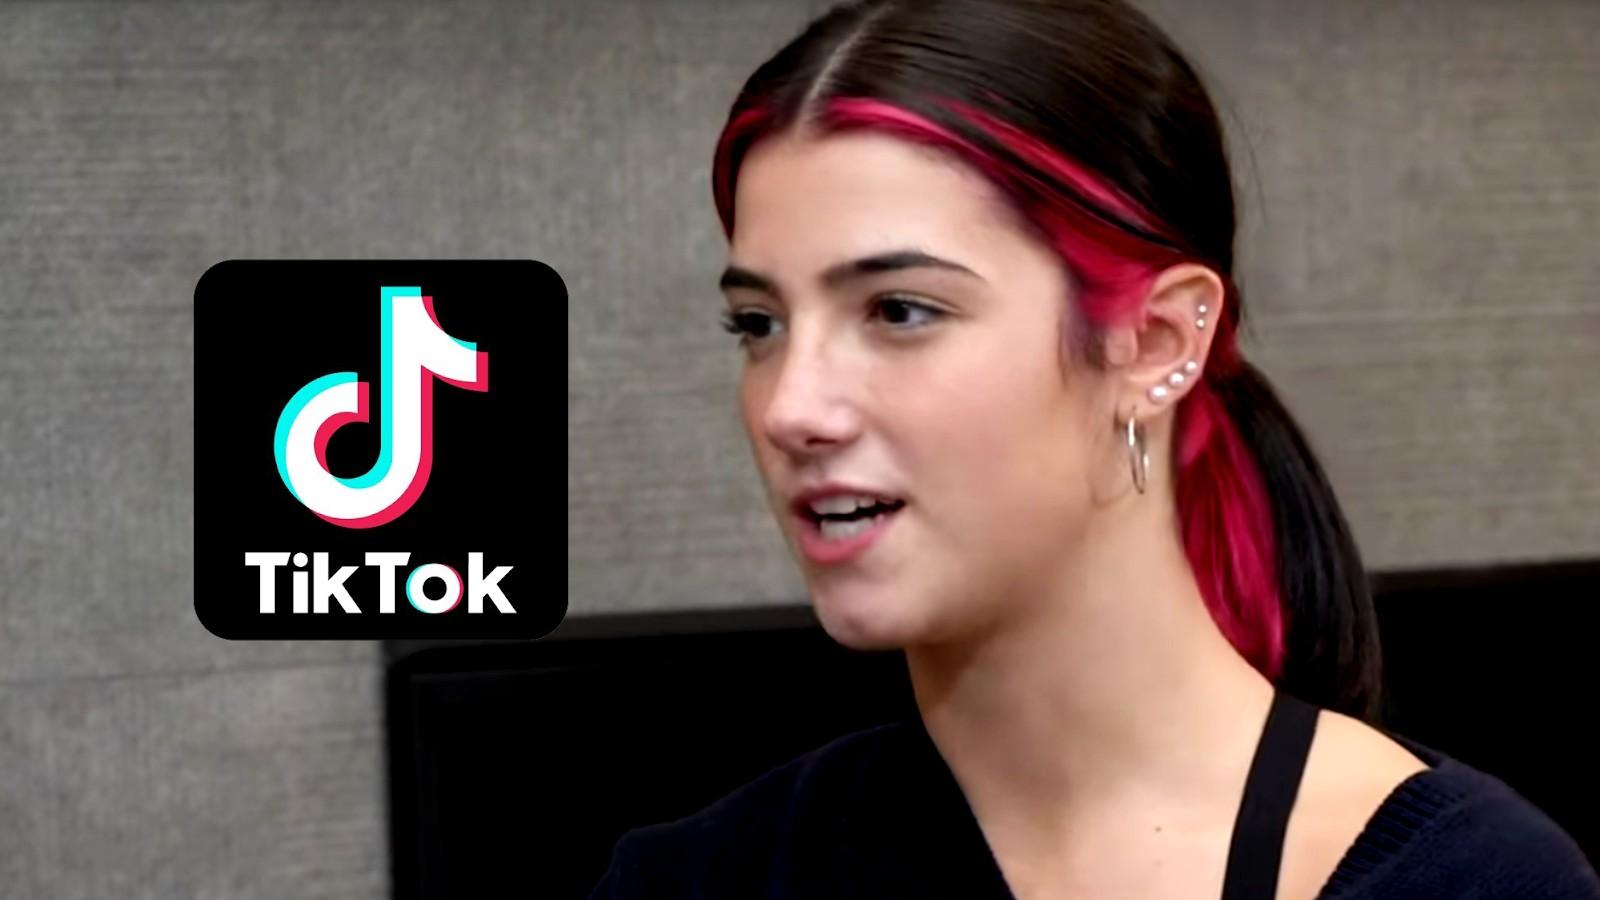 Charli D'Amelio looks to the left at a TikTok logo